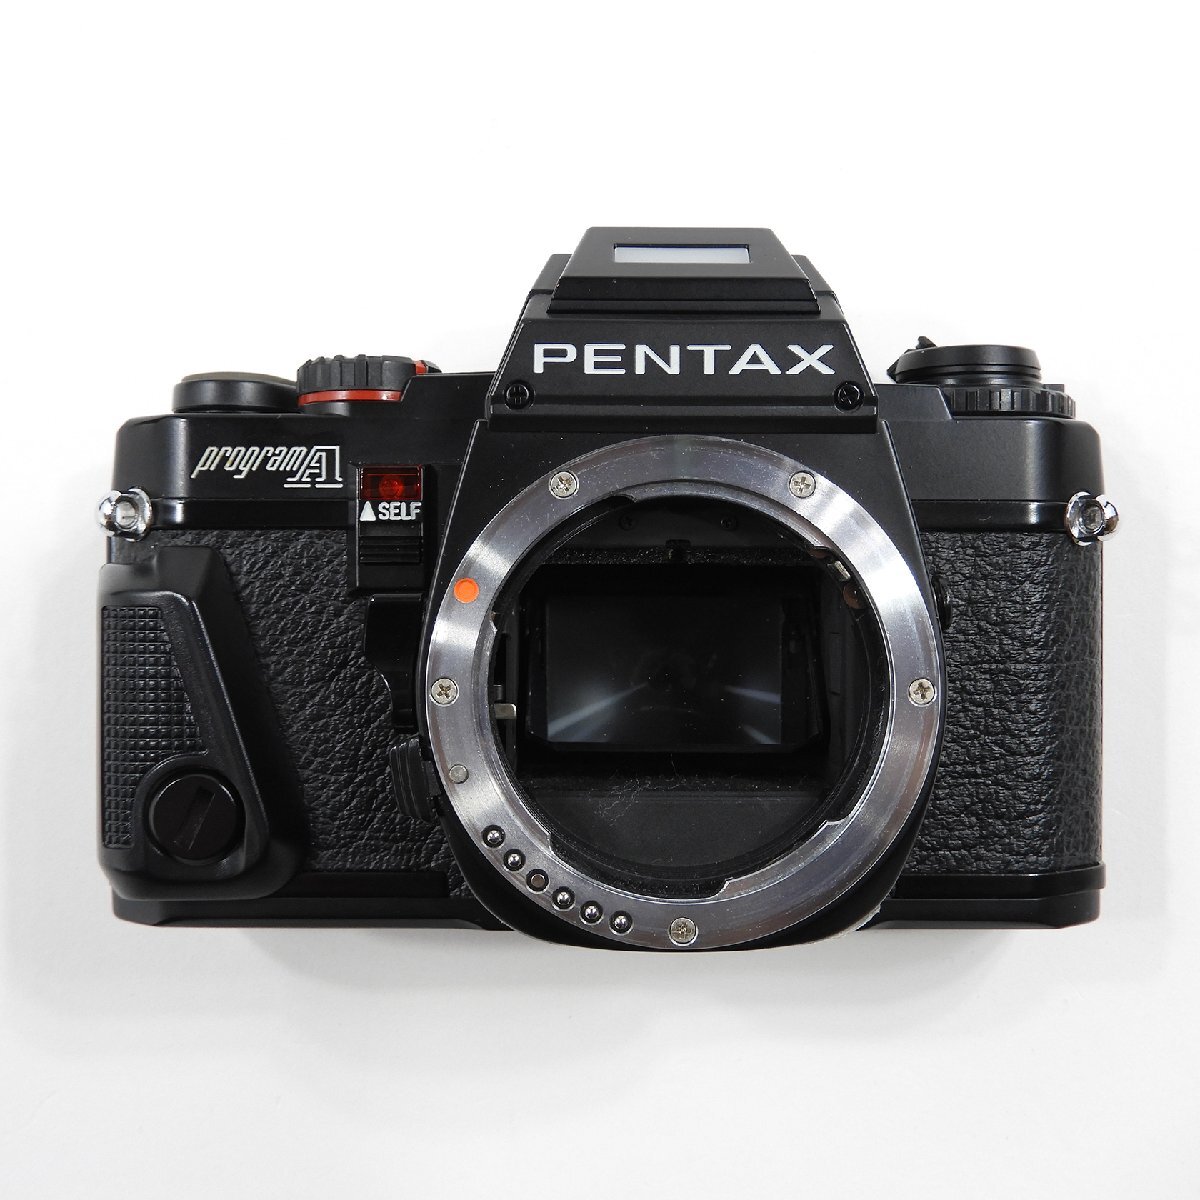 PENTAX ペンタックス program A フィルムカメラ ジャンク #18572 昭和 レトロ オールド ボディ 本体_画像2